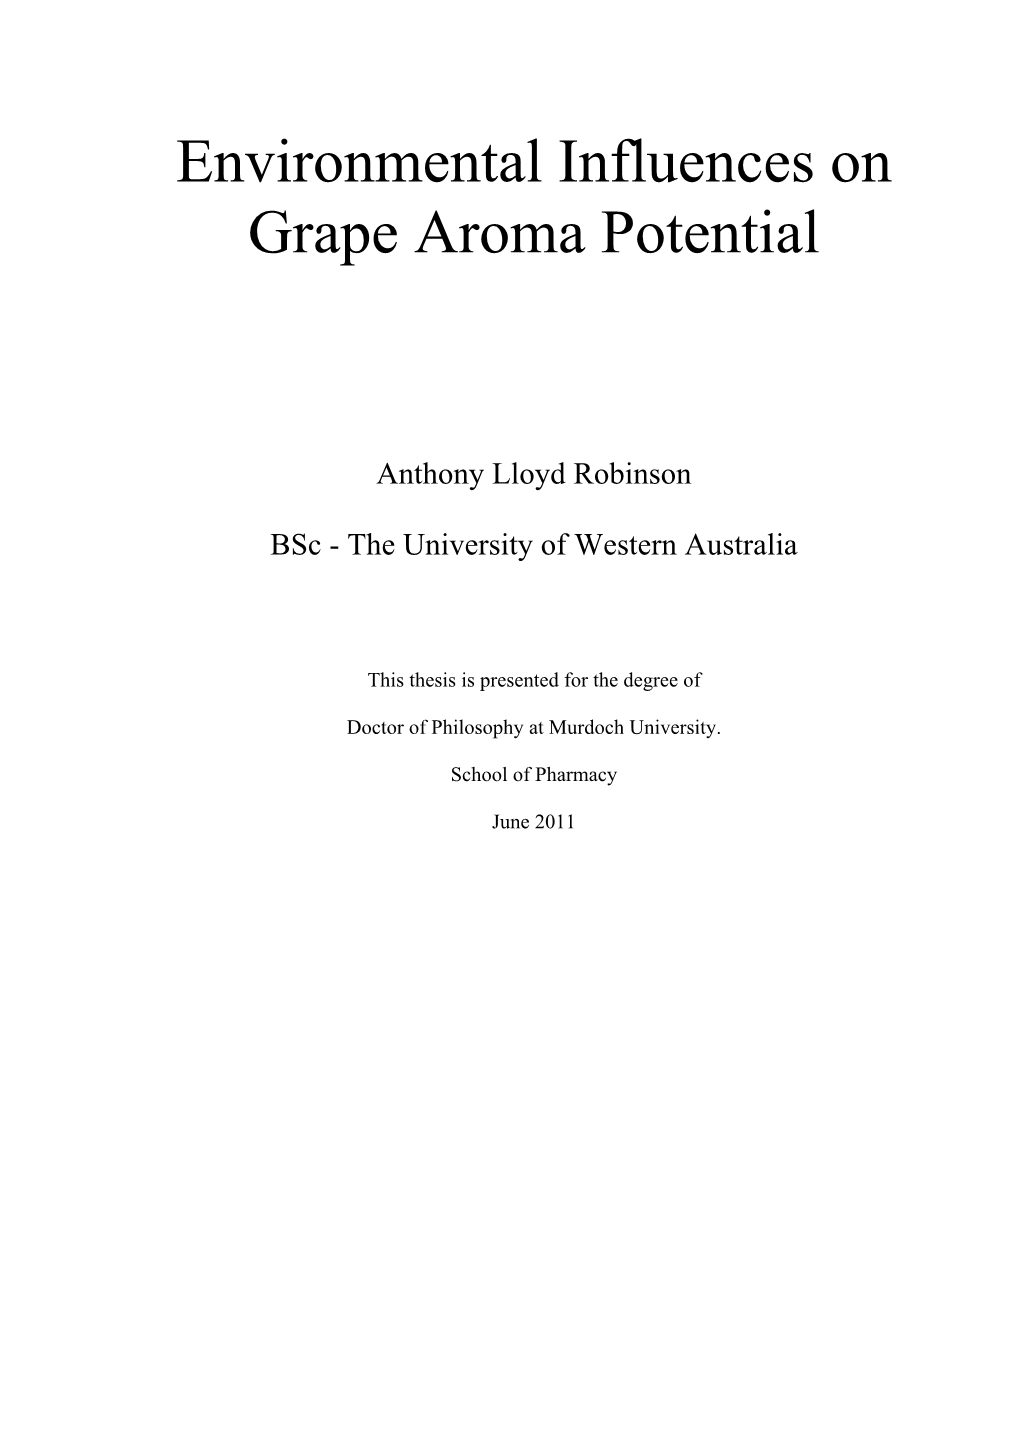 Environmental Influences on Grape Aroma Potential